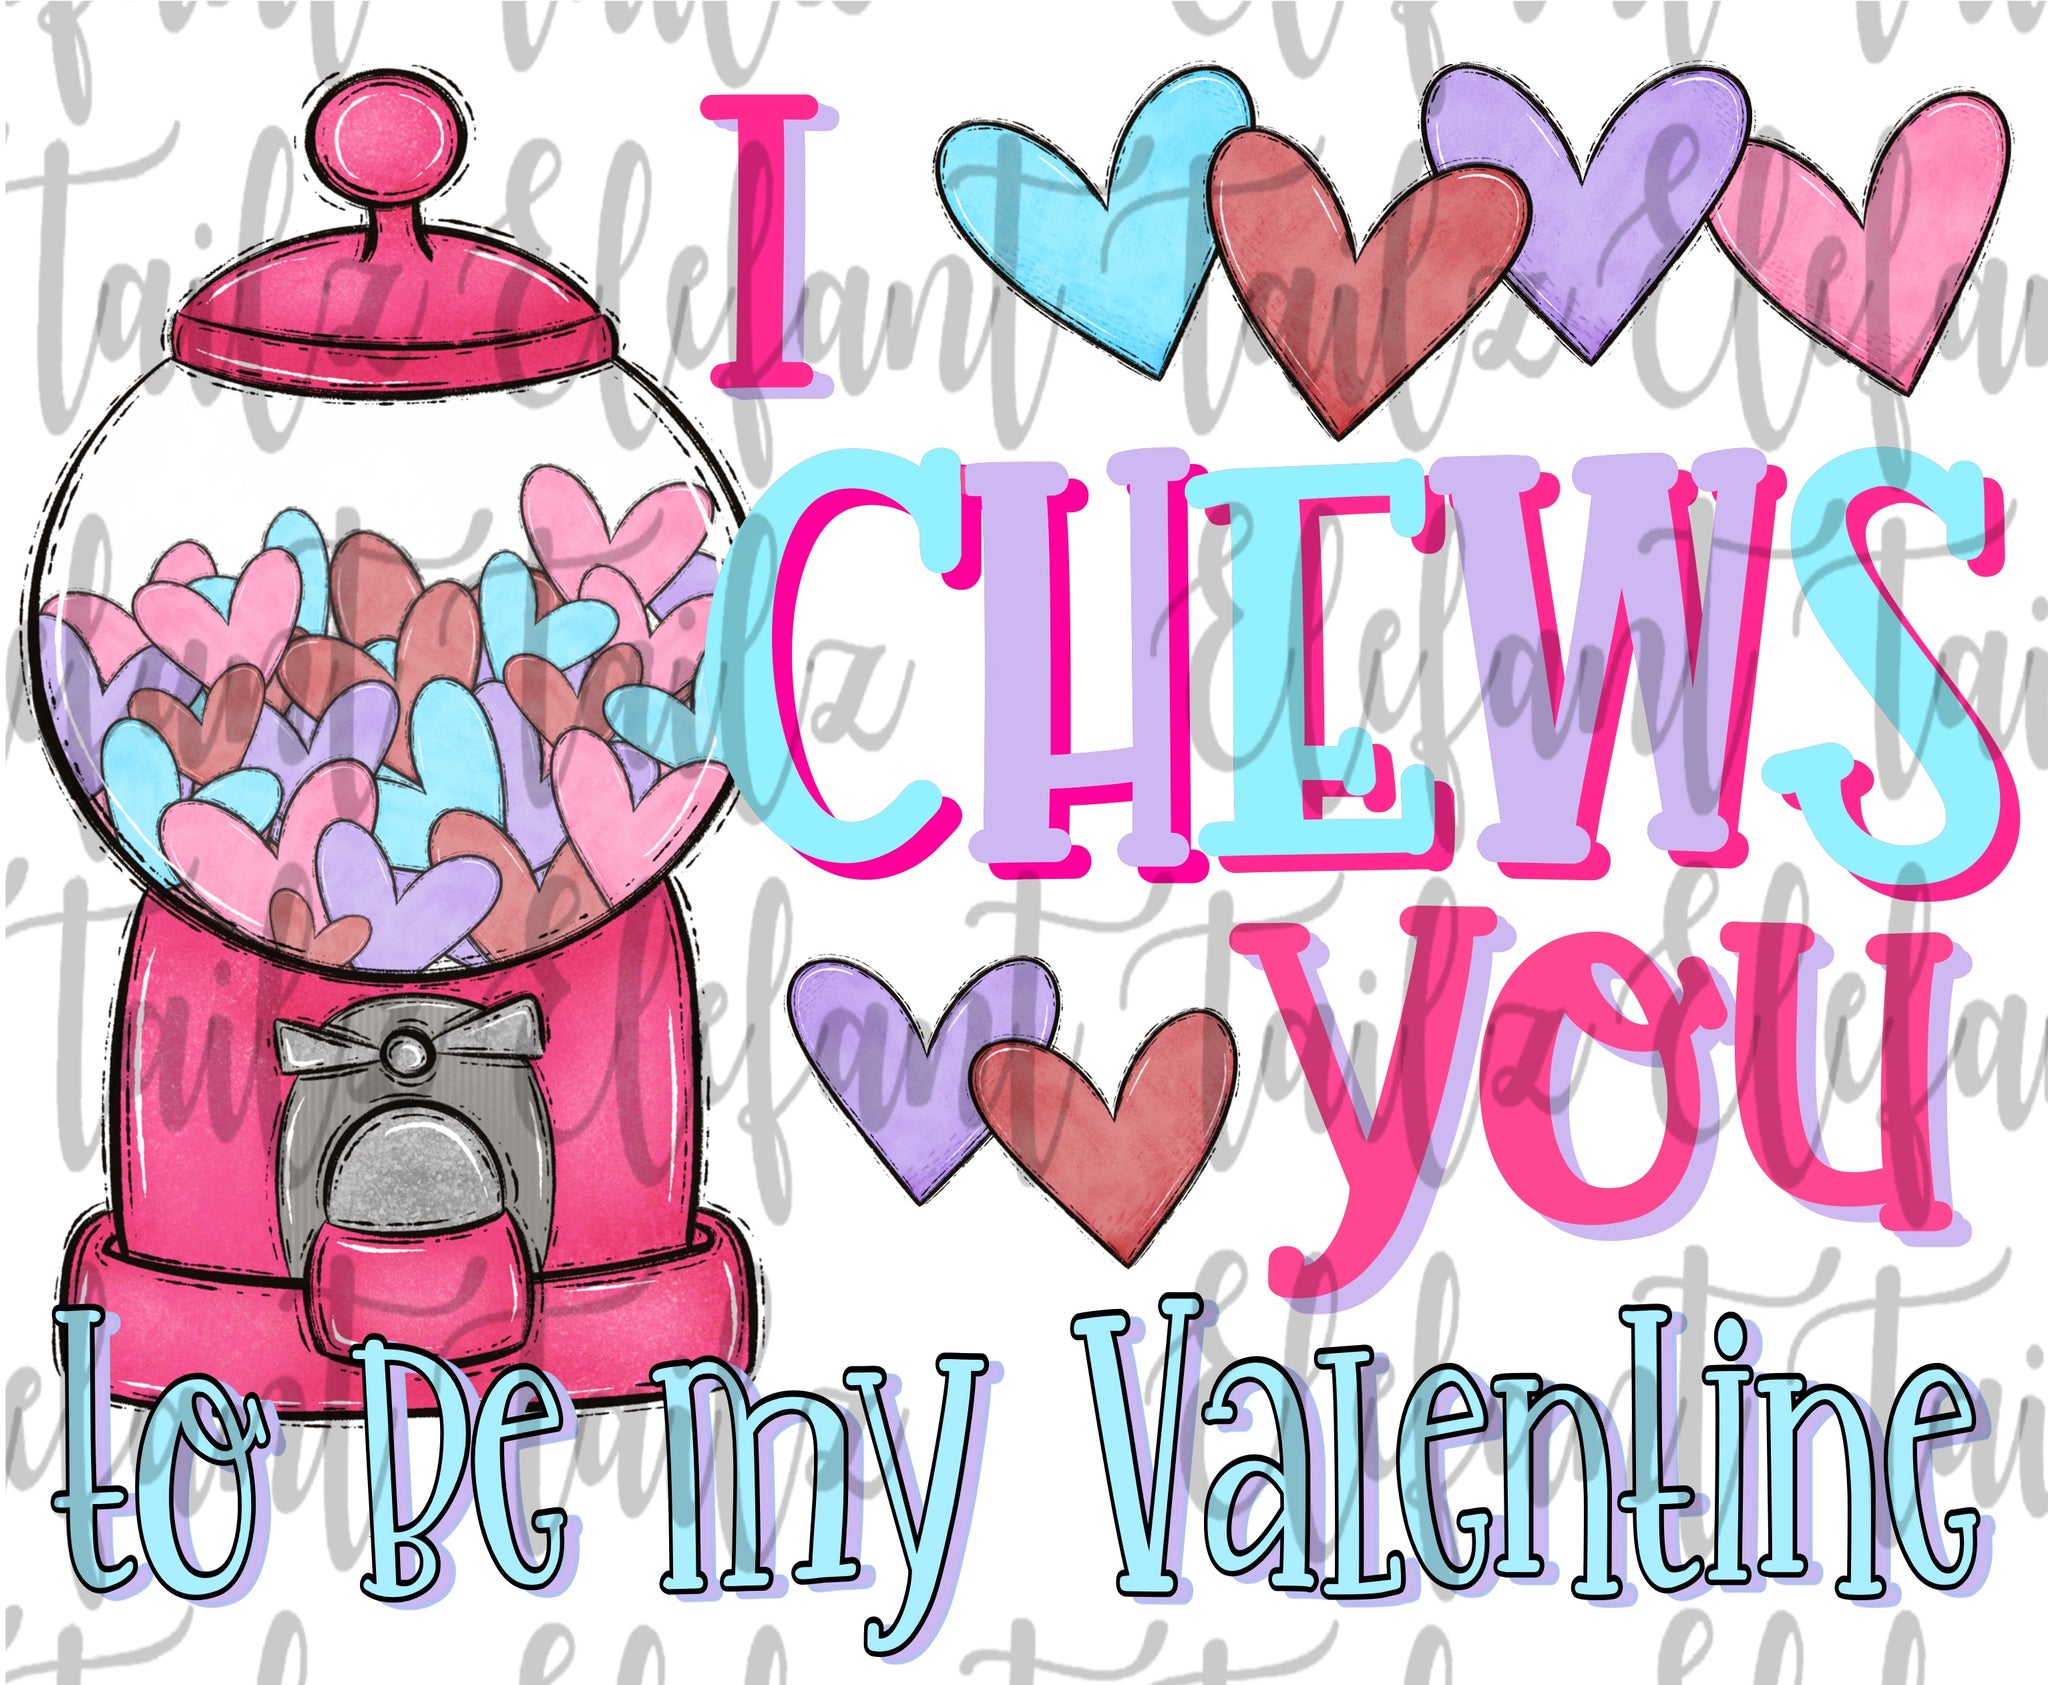 Chews You To Be My Valentine